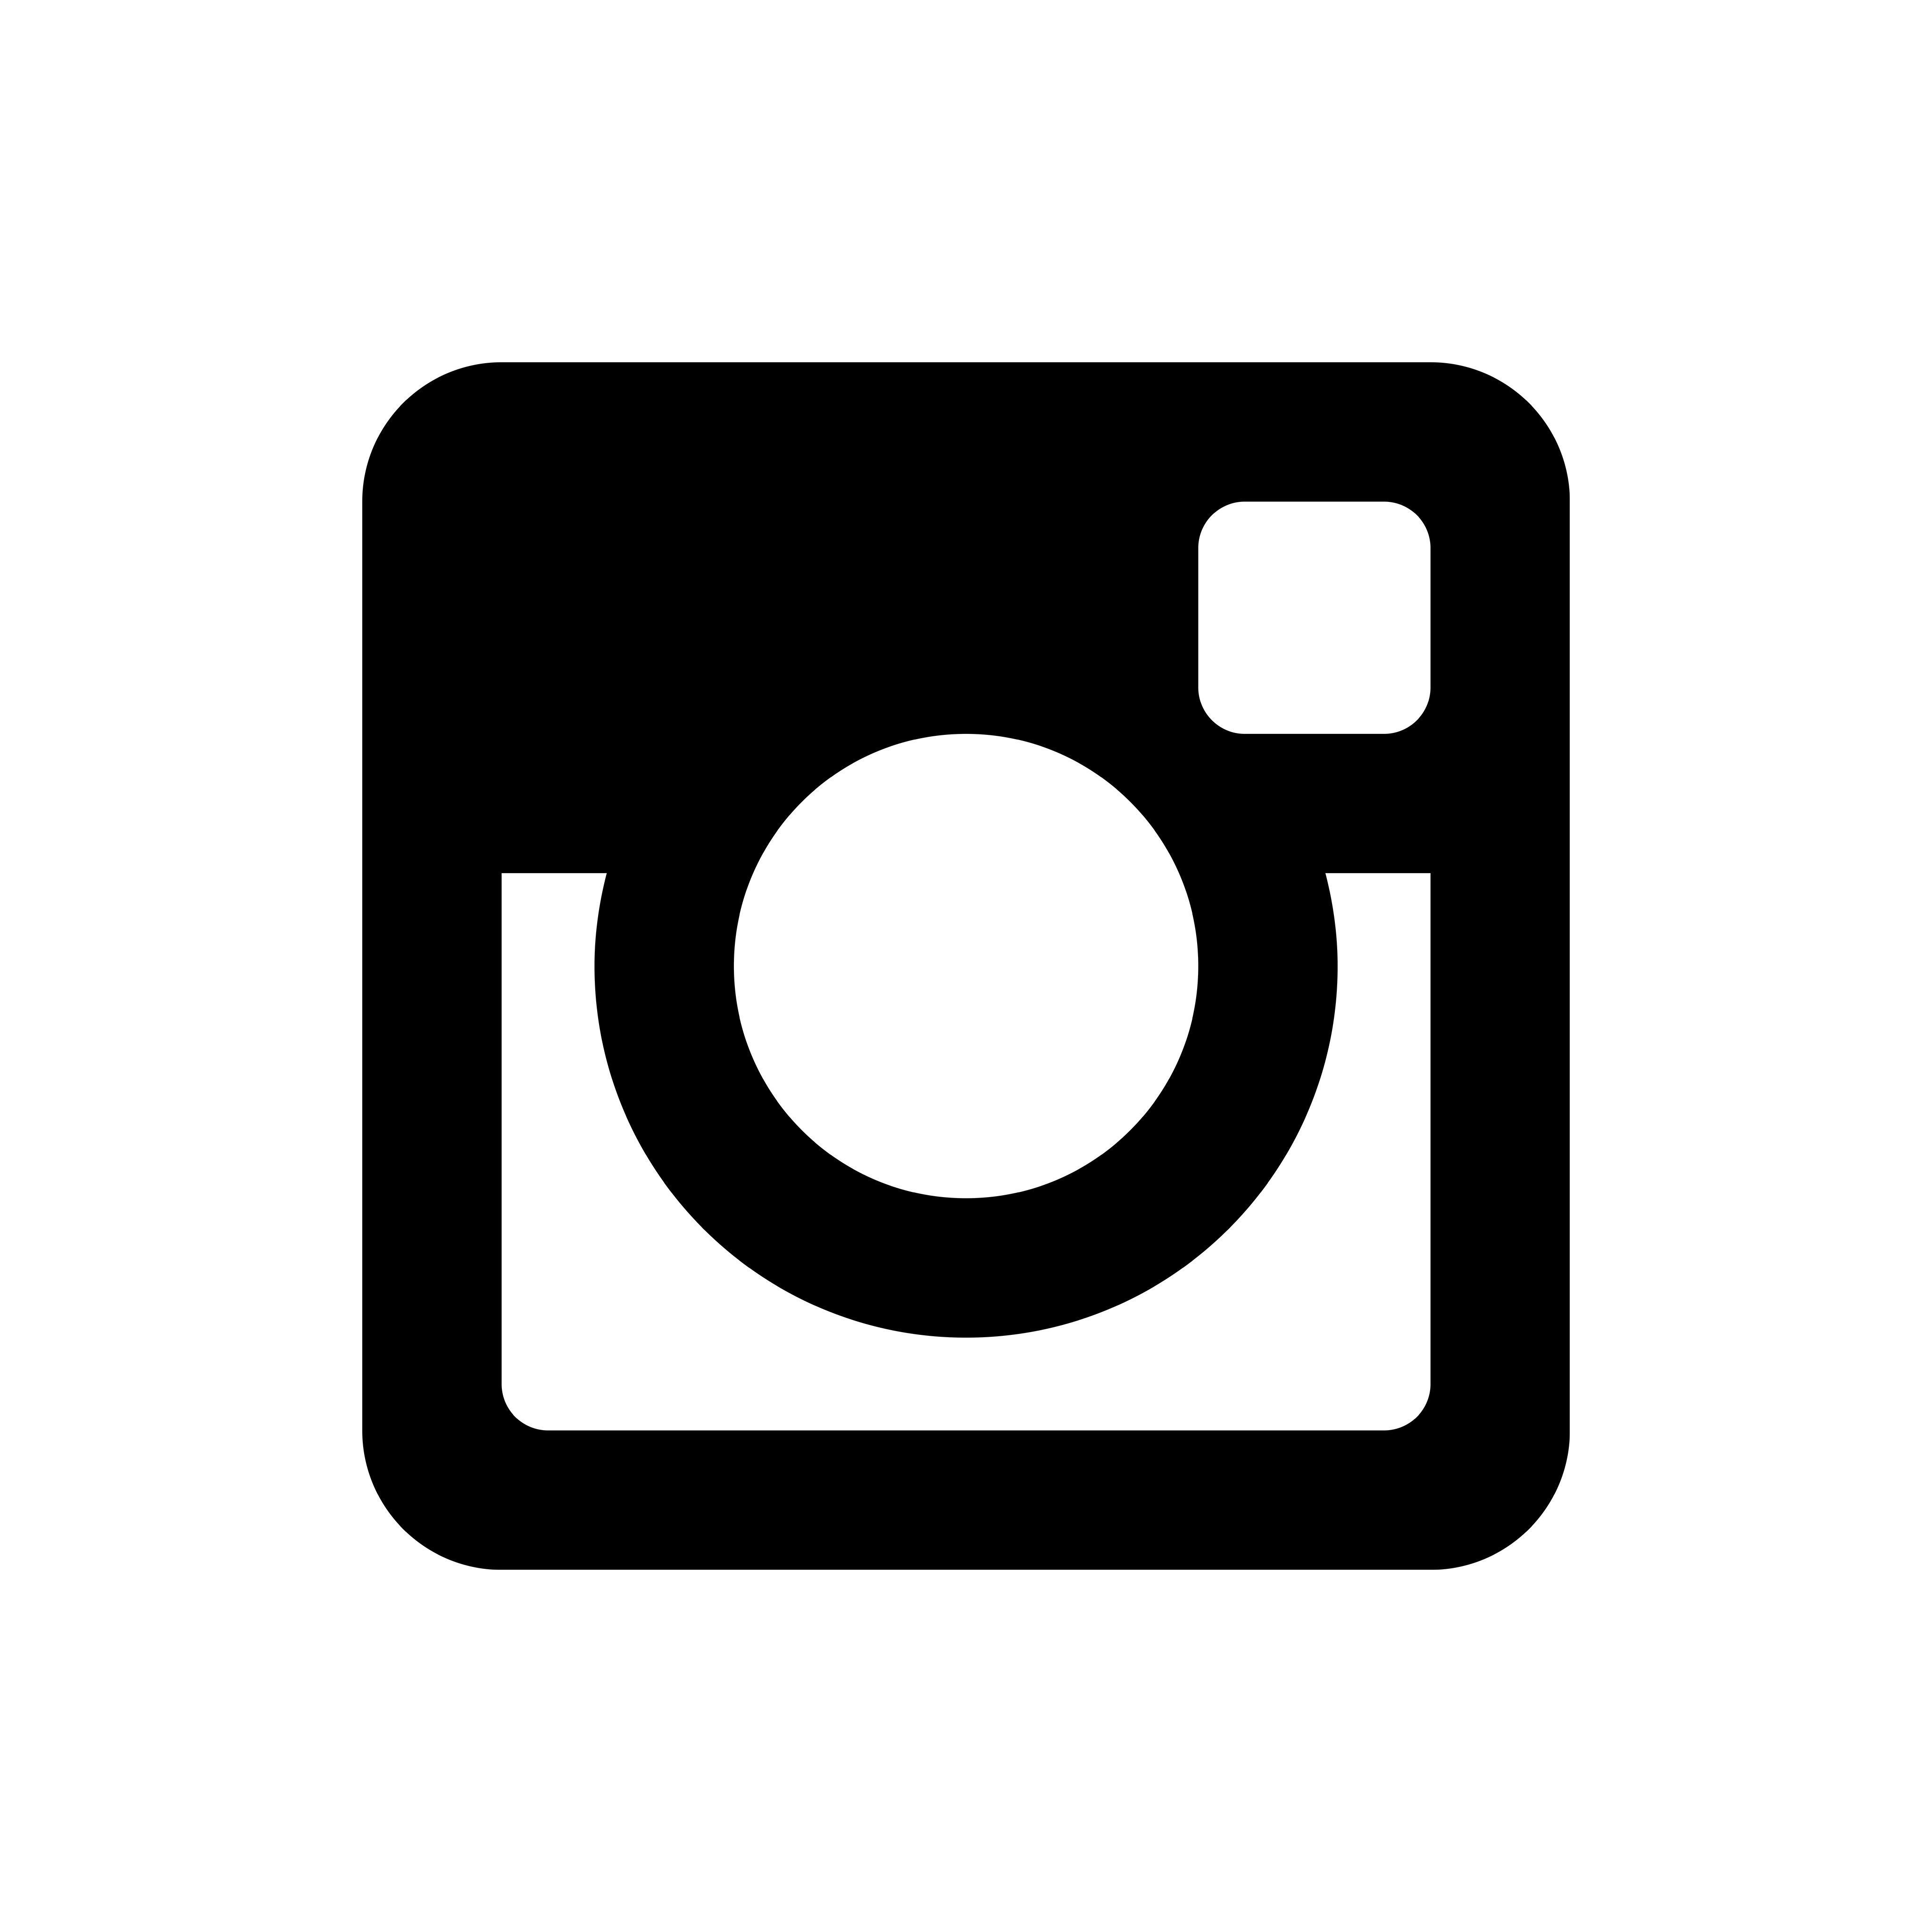 Large Instagram Logo - Instagram logo printable banner freeuse library